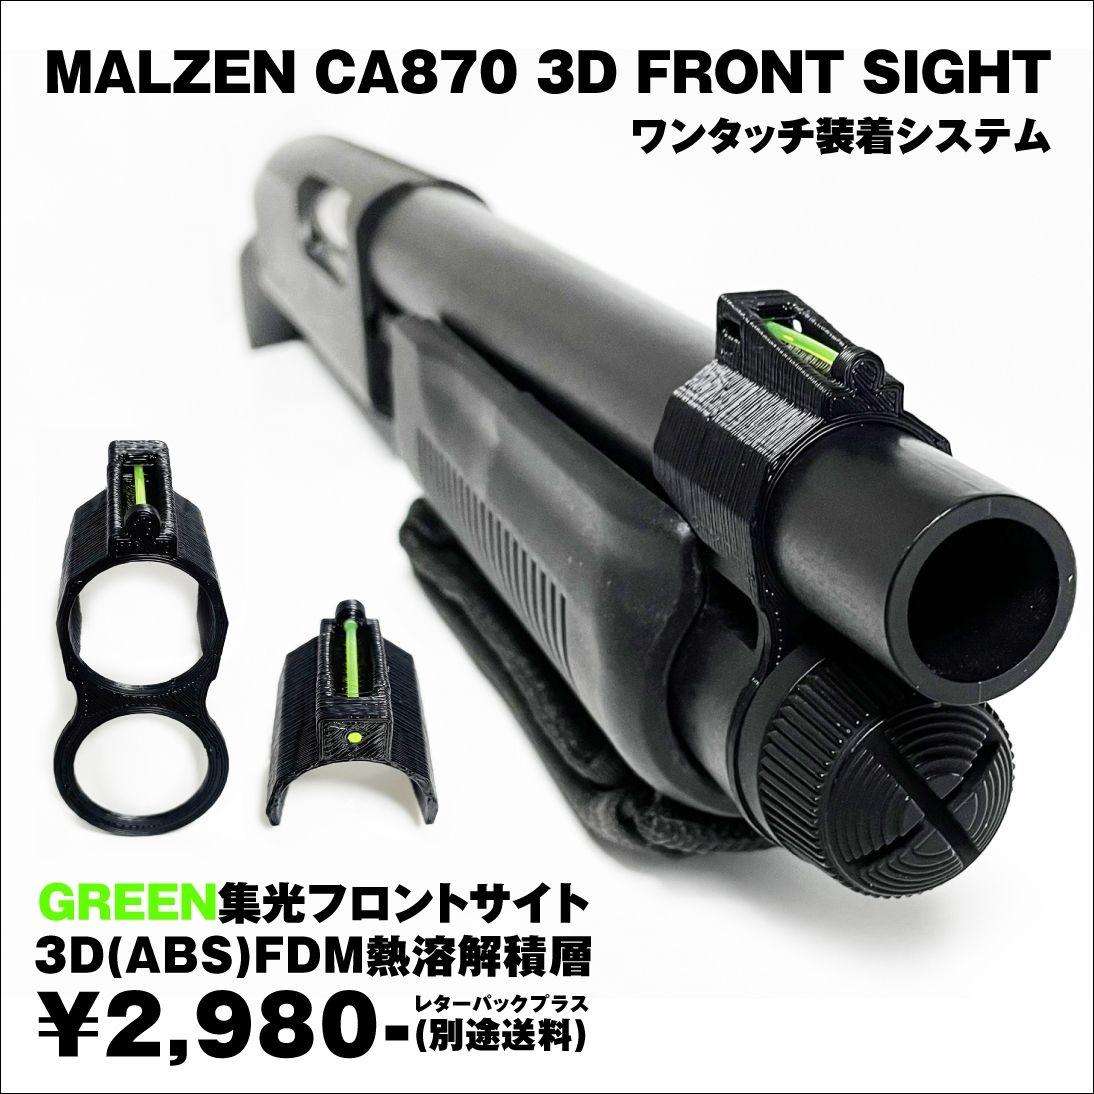 PR【在庫販売・受注生産】MALZEN マルゼン CA870 3D FRONT SIGHT GREEN 集光 ファイバー フロントサイト 3D(ABS)FDM熱溶解積層 ワンタッチ装着システム HILOGstore